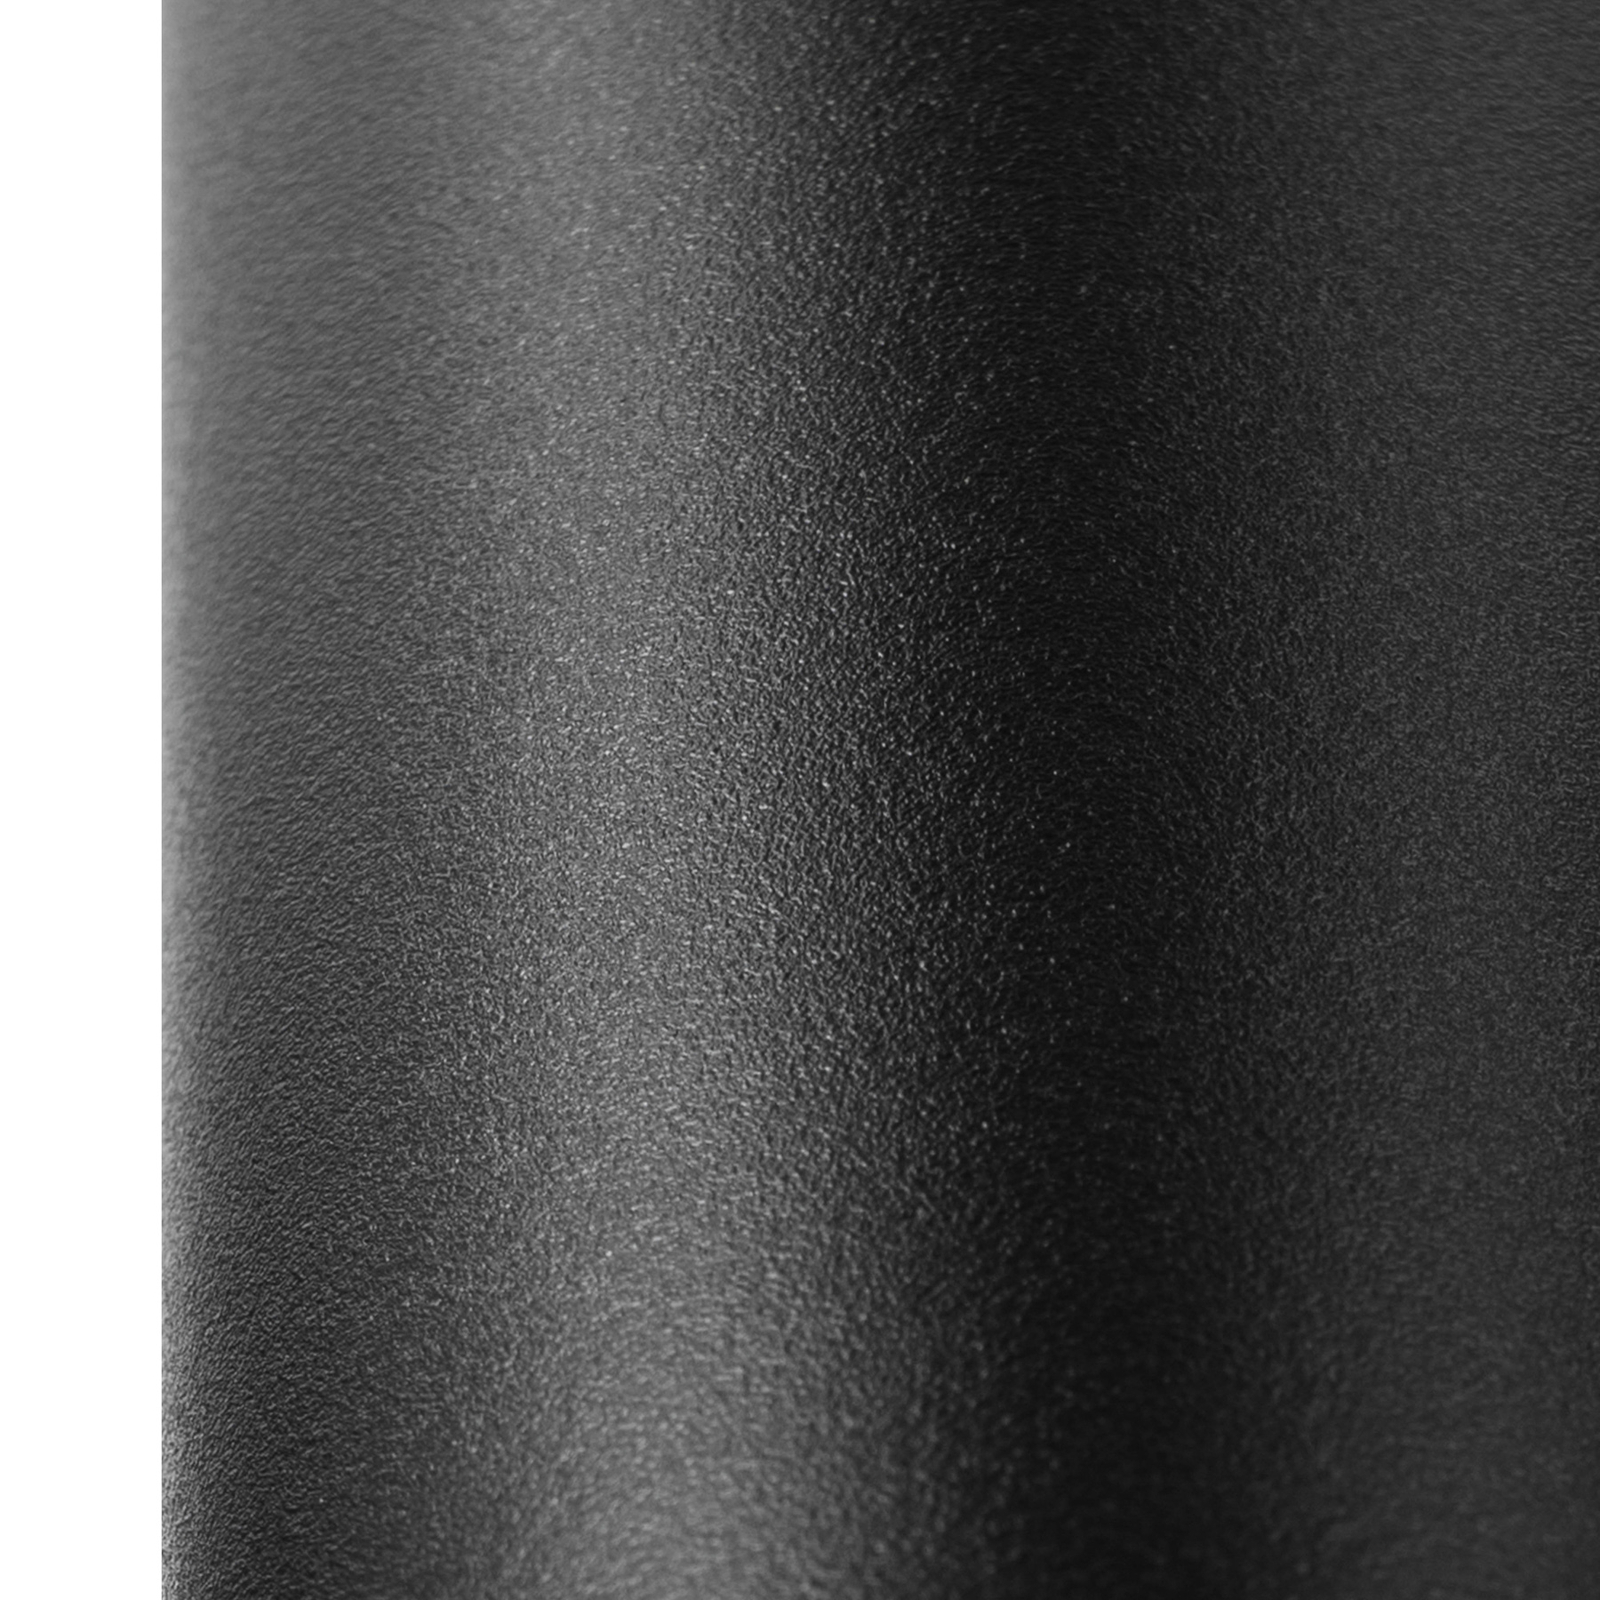 Colgante Arcchio Ejona negro E27 4/15cm